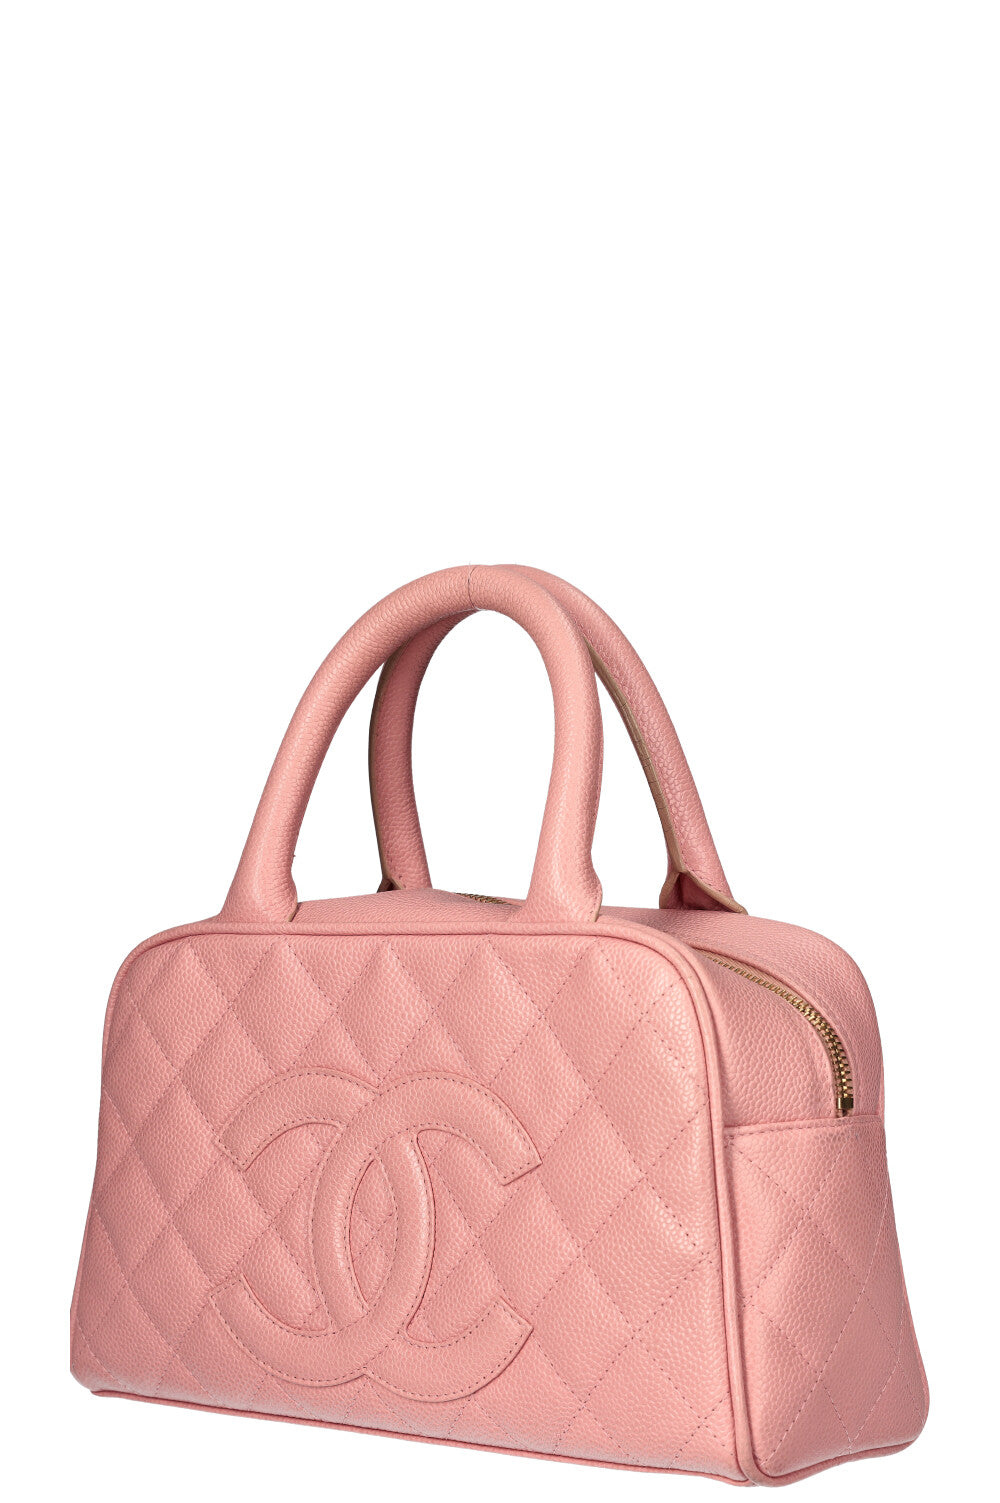 Chanel, Timeless confetti tweed bag - Unique Designer Pieces